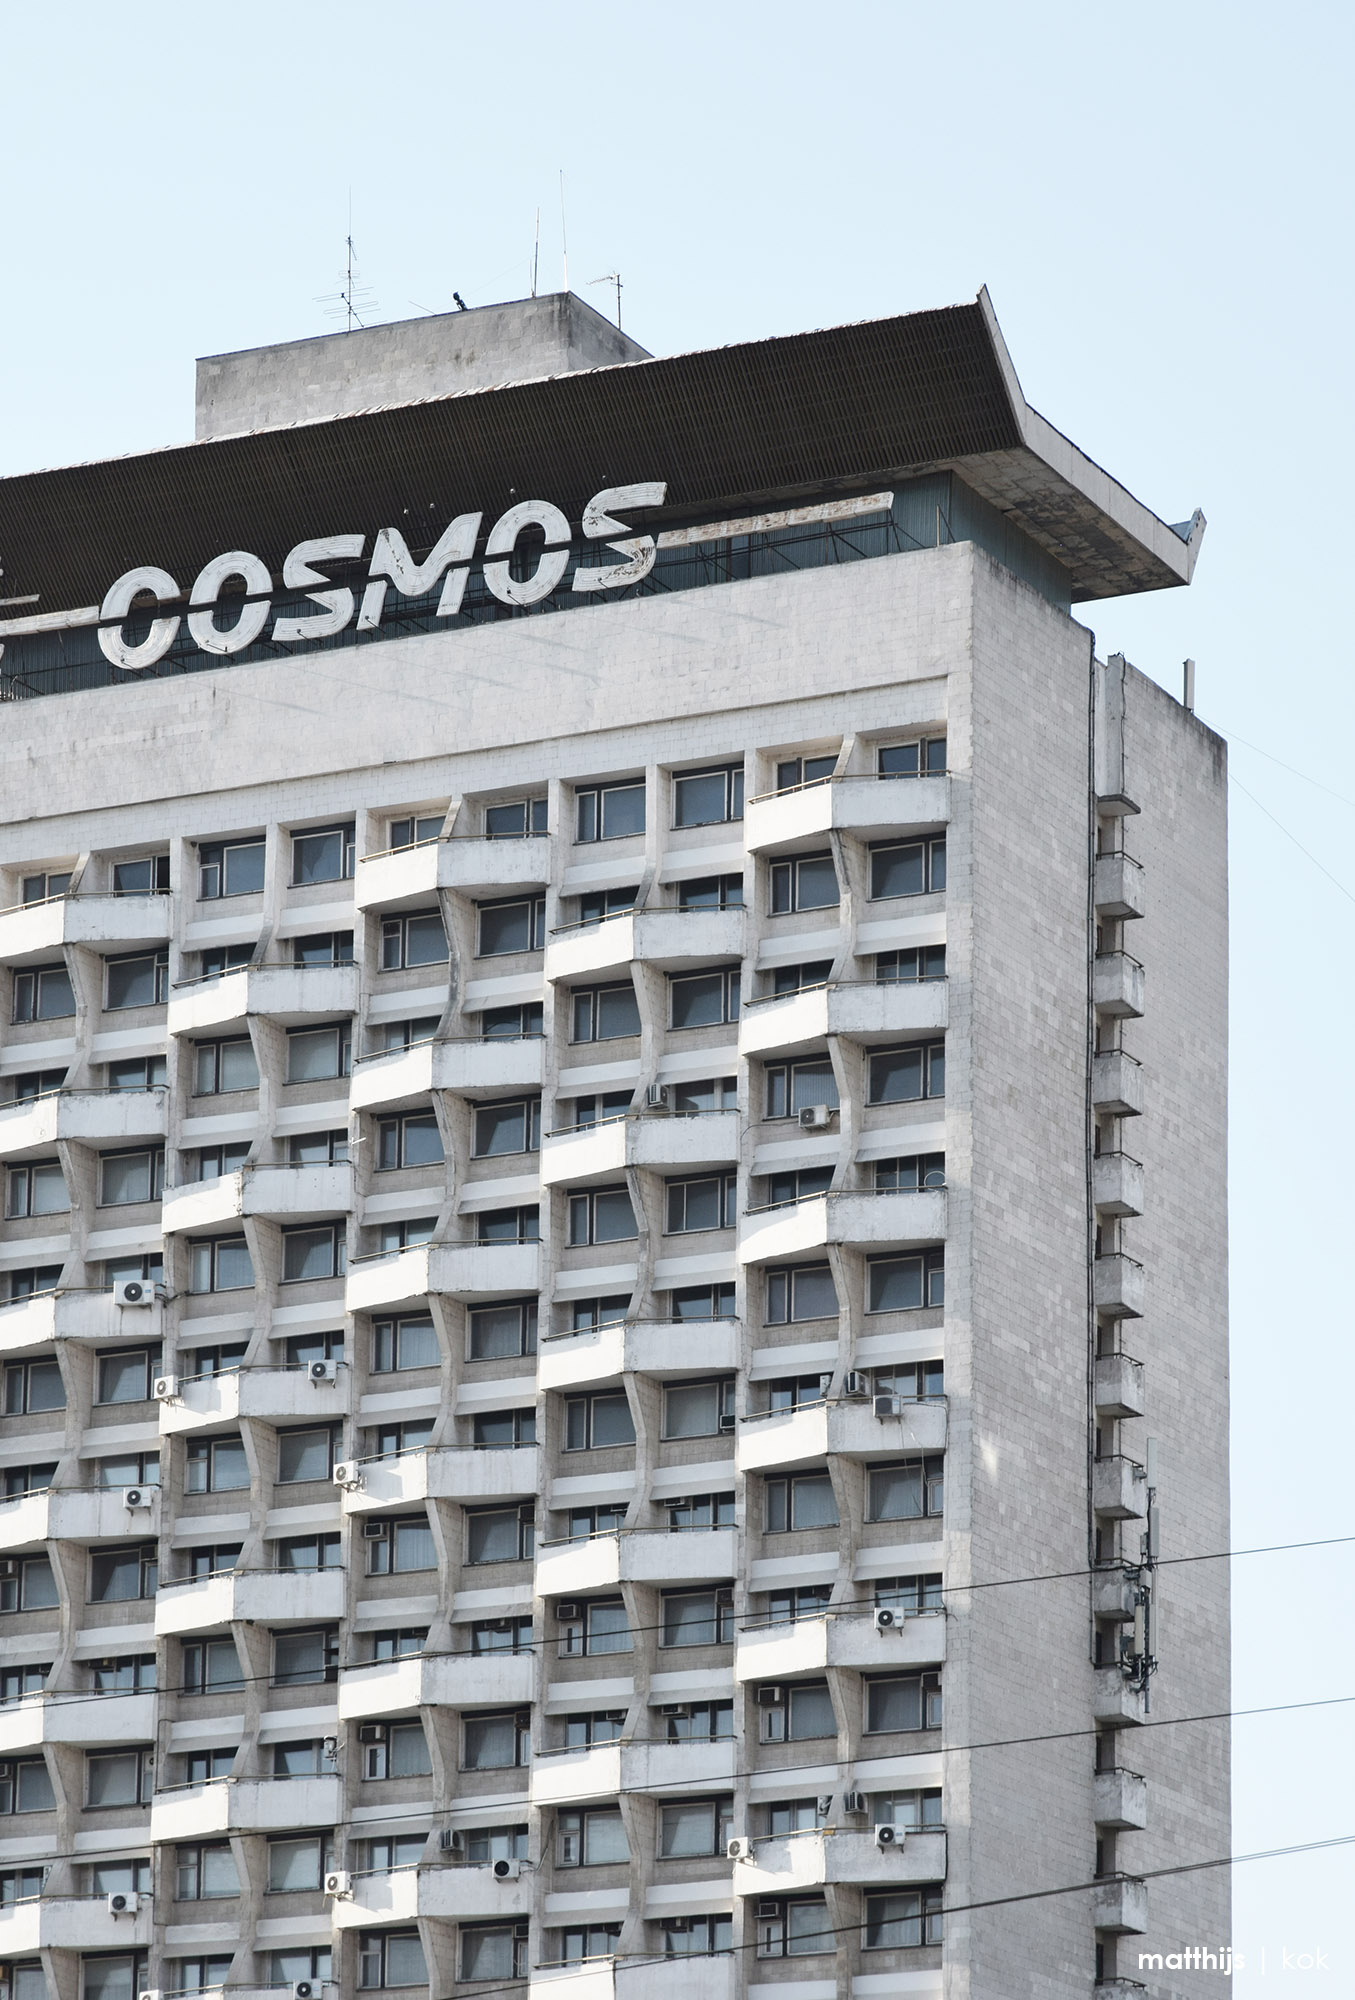 Hotel Cosmos, Chisinau, Moldova | Photo by Matthijs Kok